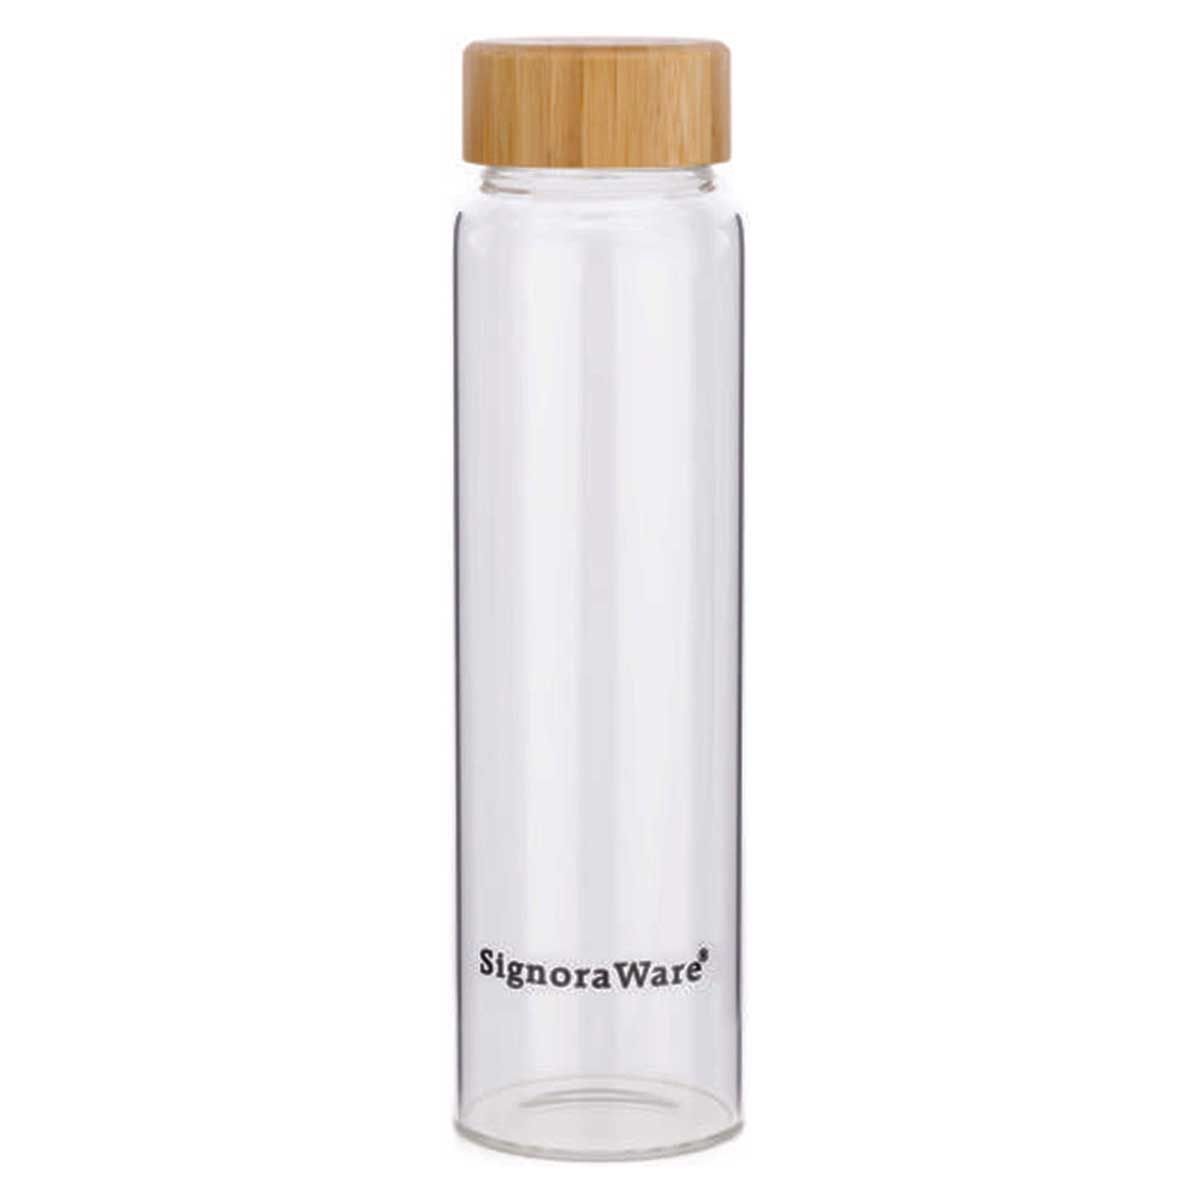 Signoraware bamboo Glass Bottle 500ml - 1451